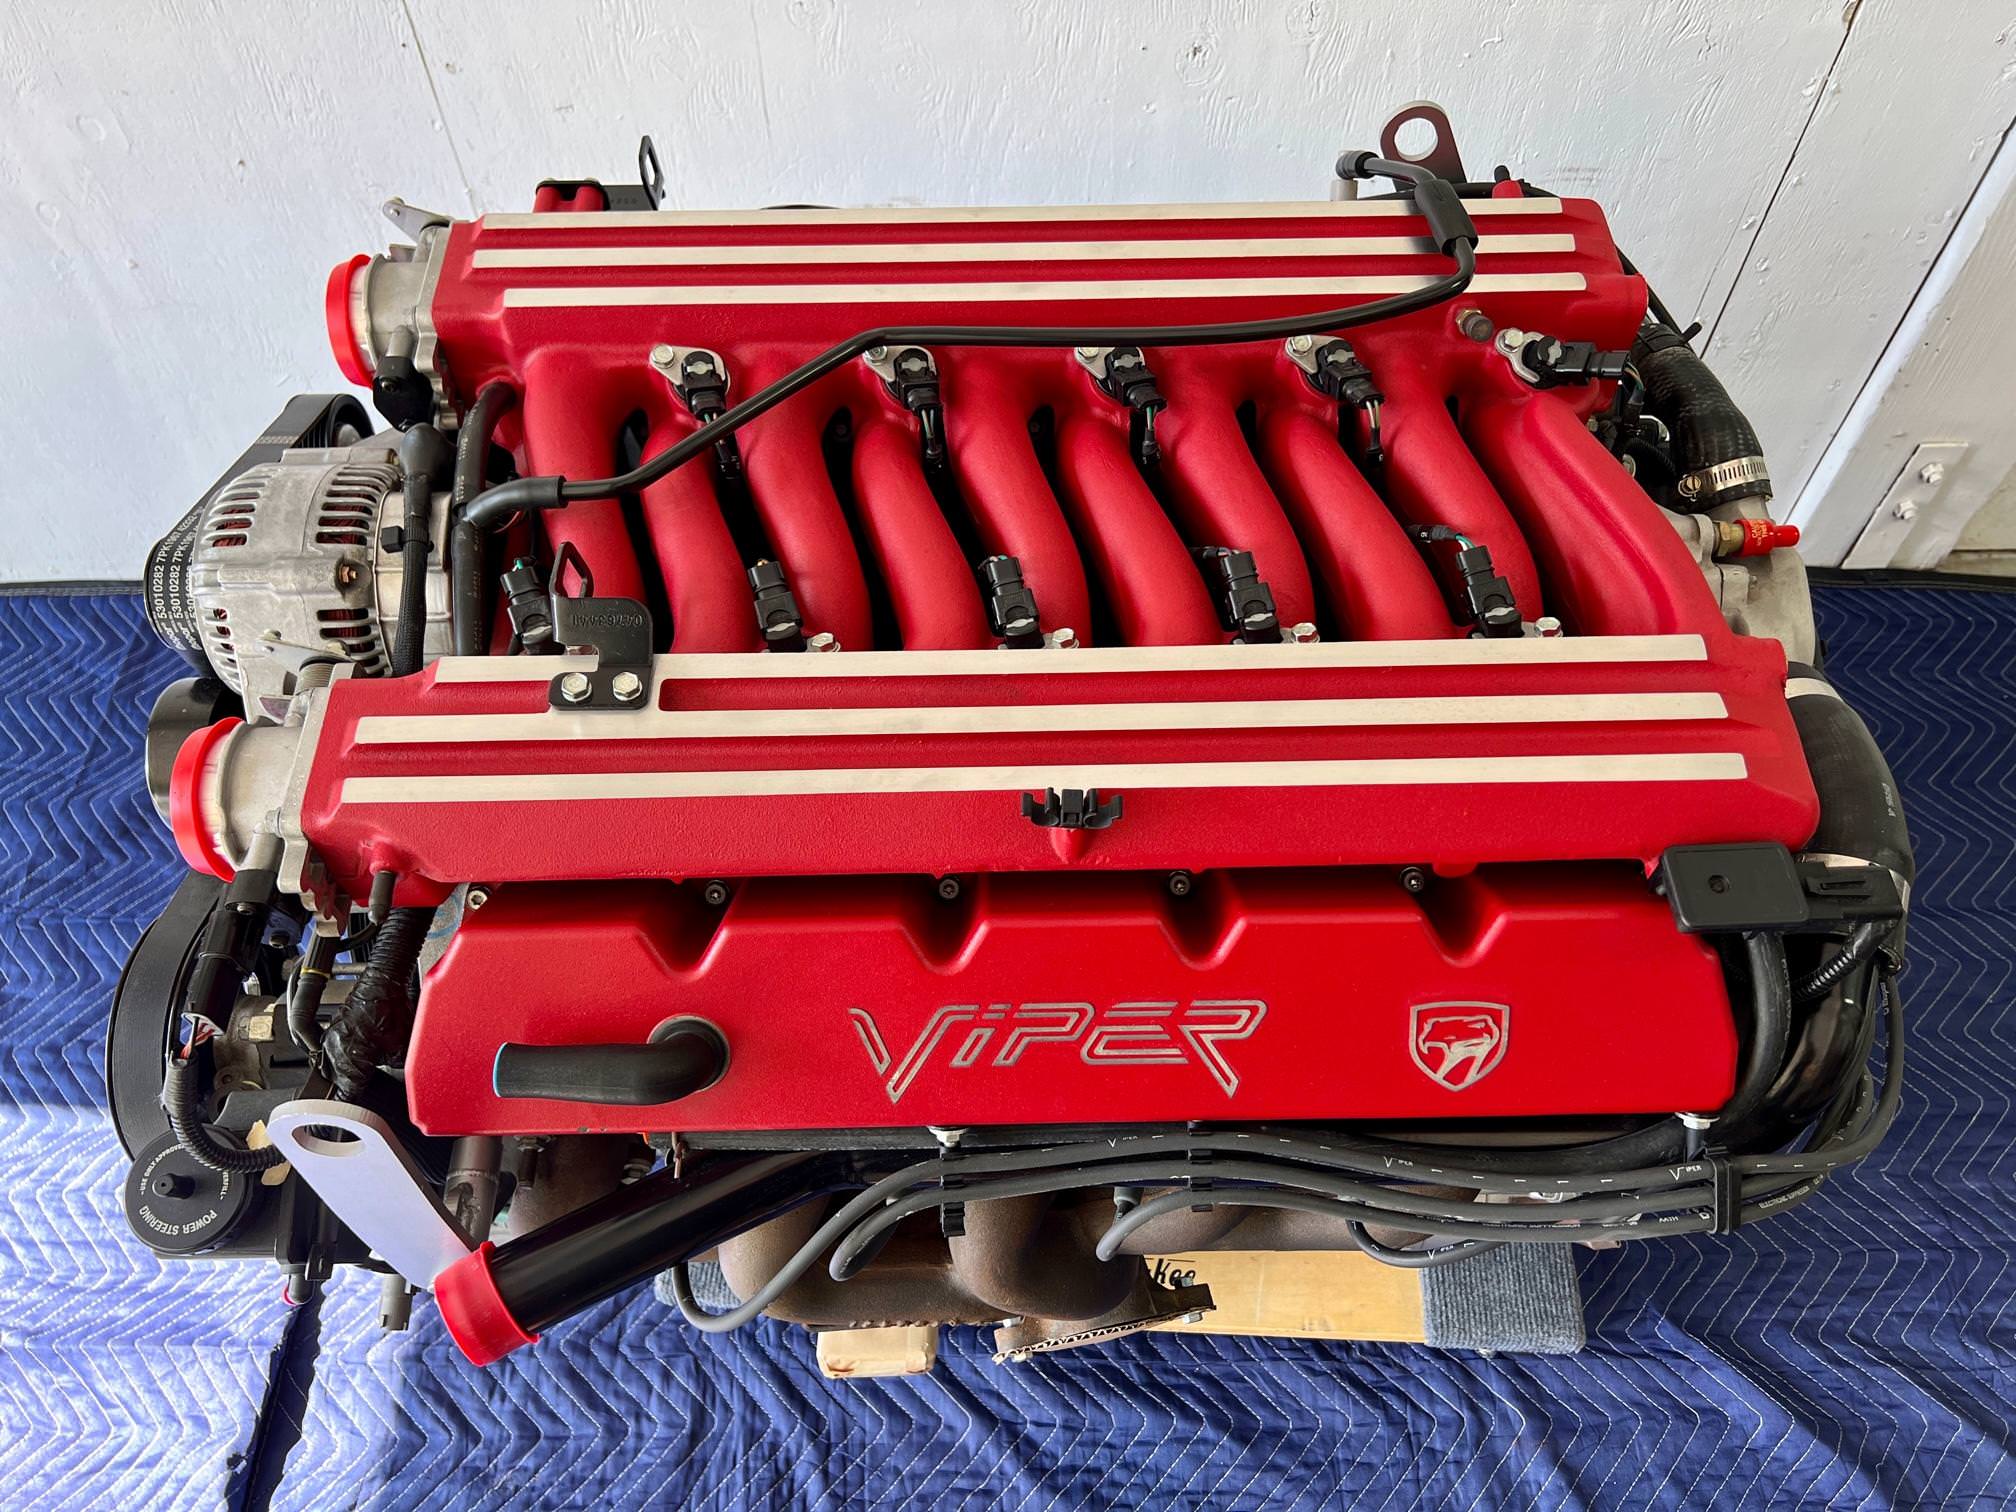 000; 2010 Dodge Viper Gen 4 ACR-X Crate Engine - 638 HP+